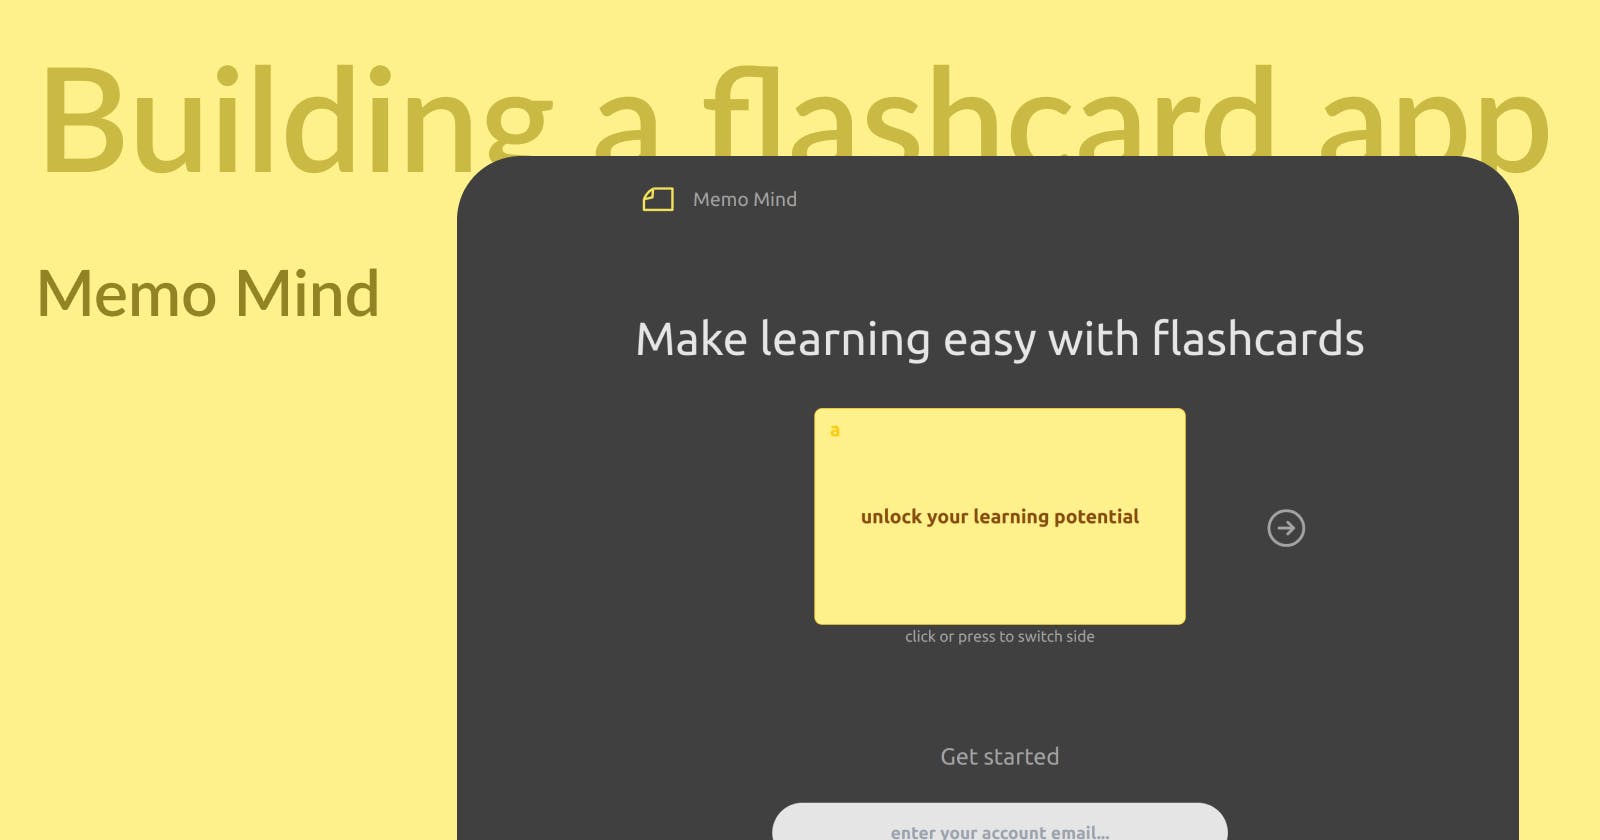 Building a flashcard app - Memo Mind